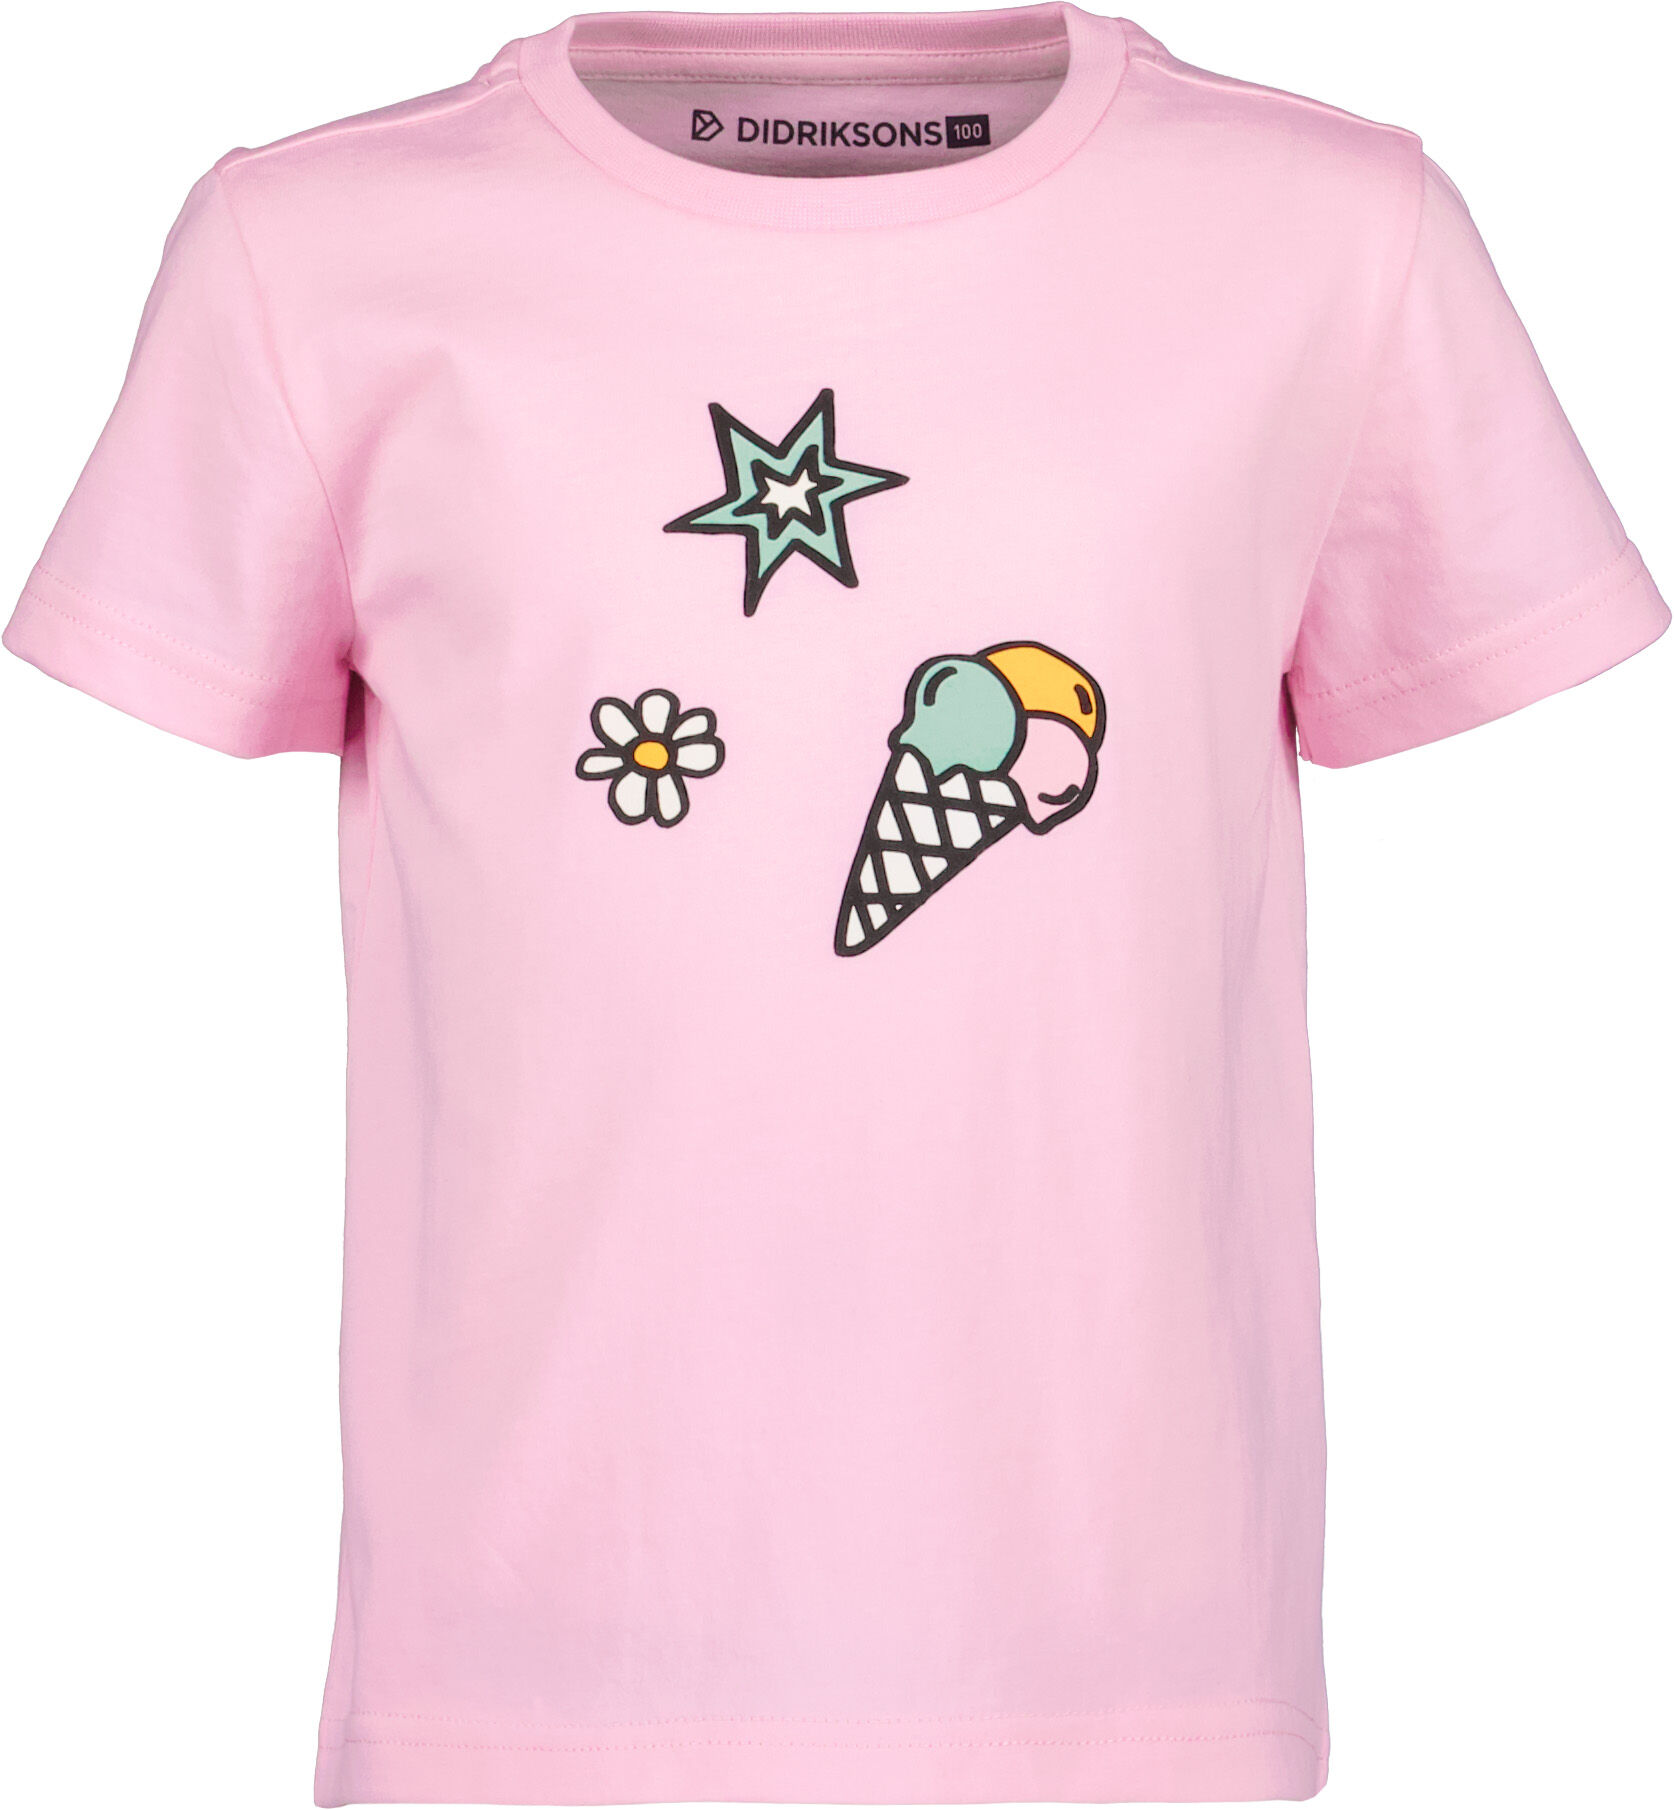 Didriksons Mynta T-shirt Orchid Pink 140